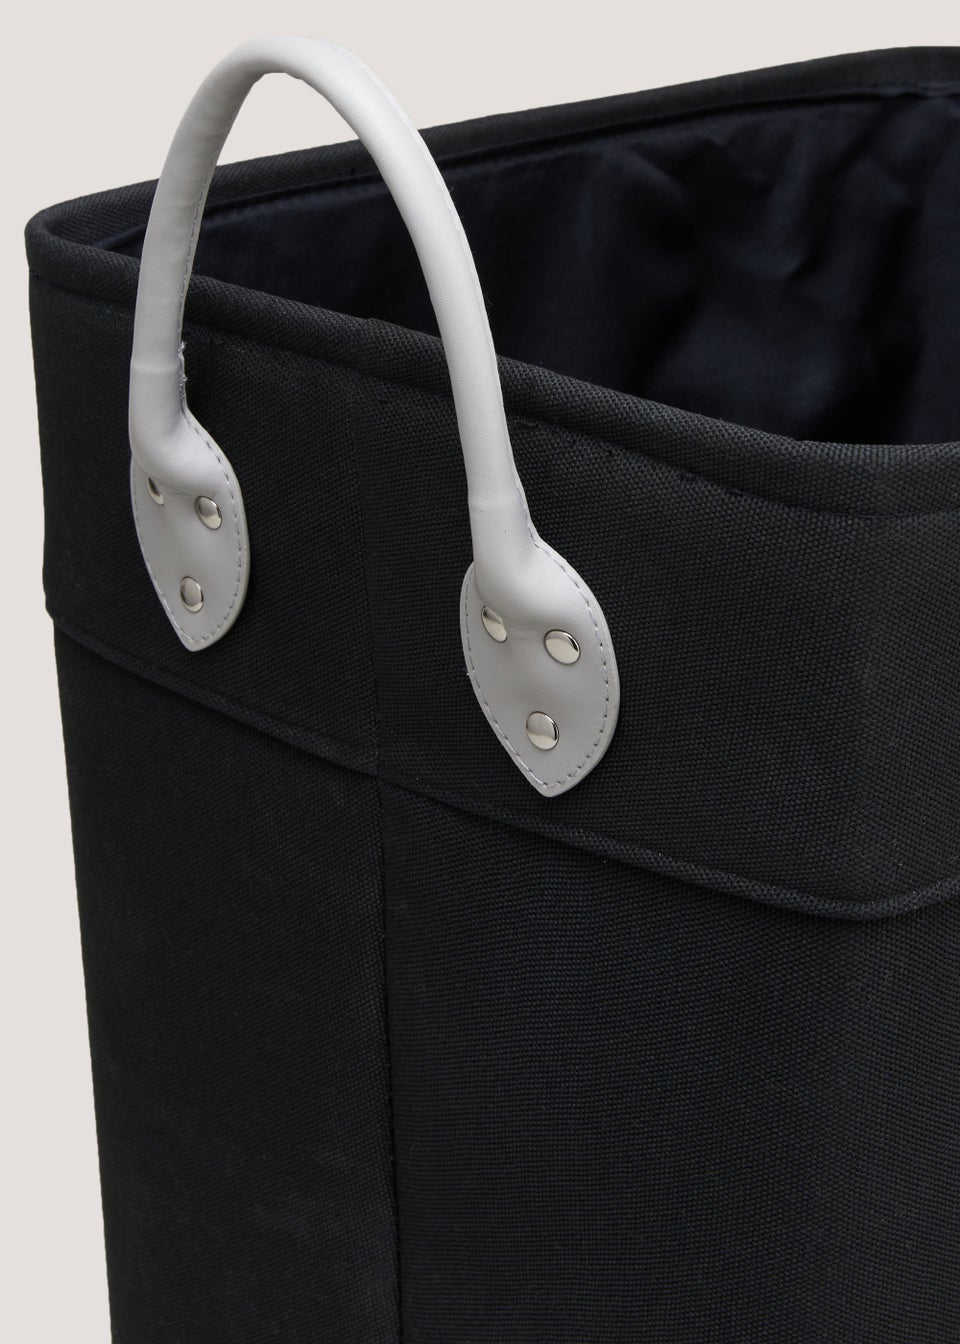 Black Laundry Co Bin (55cm x 40cm x 30cm)